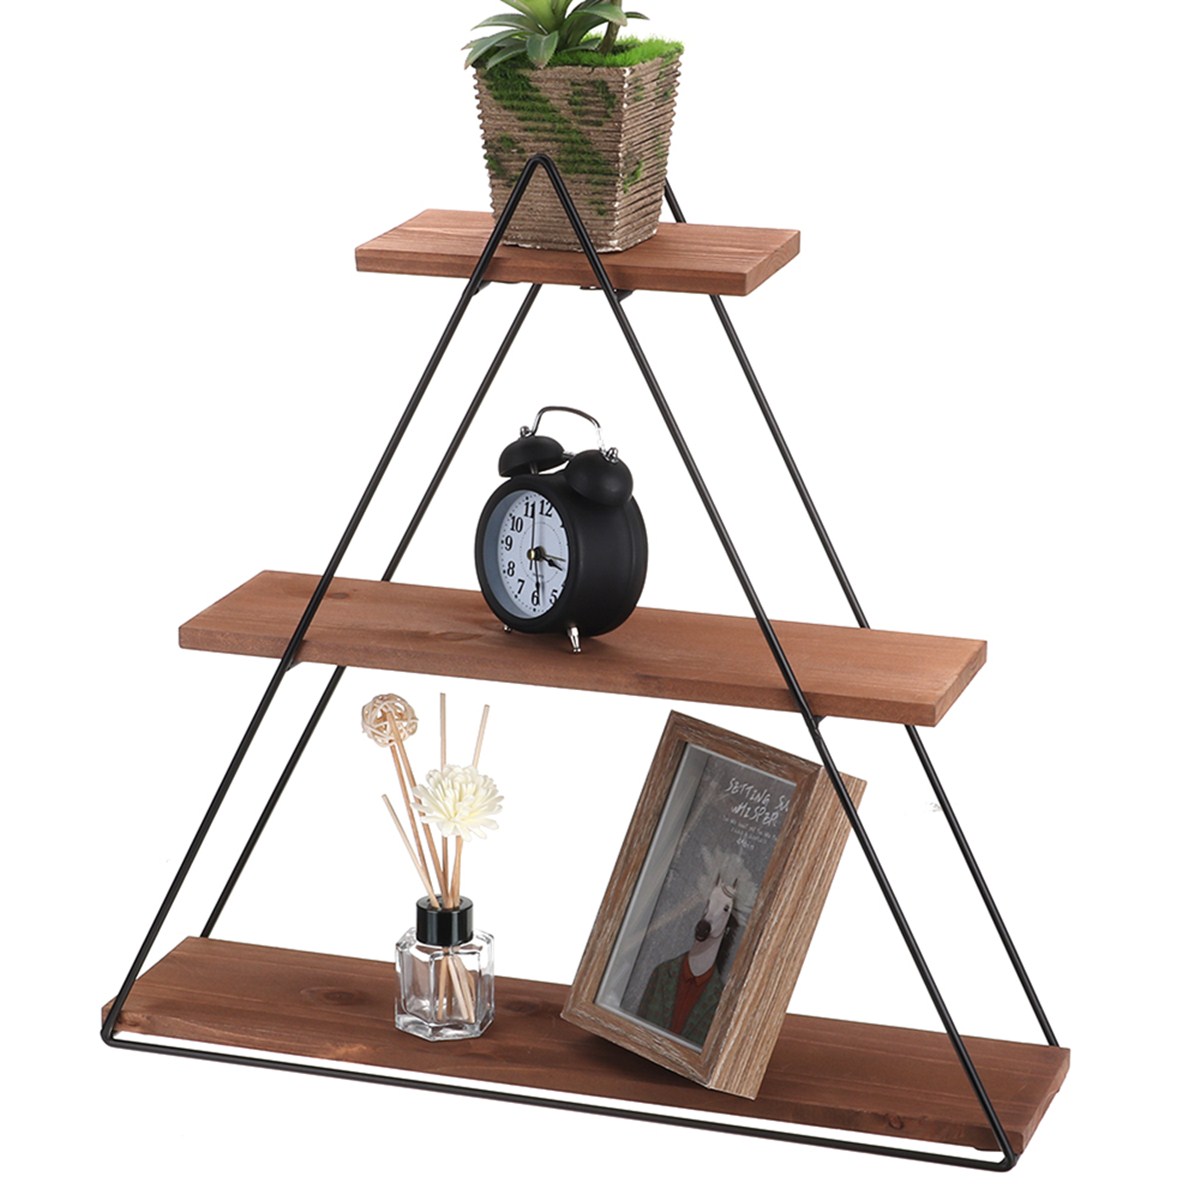 3-Tier-Triangular-Wall-Mounted-Shelf-Floating-Shelves-Metal-Display-Rack-Home-Hanging-Stand-Decor-Fo-1791083-8